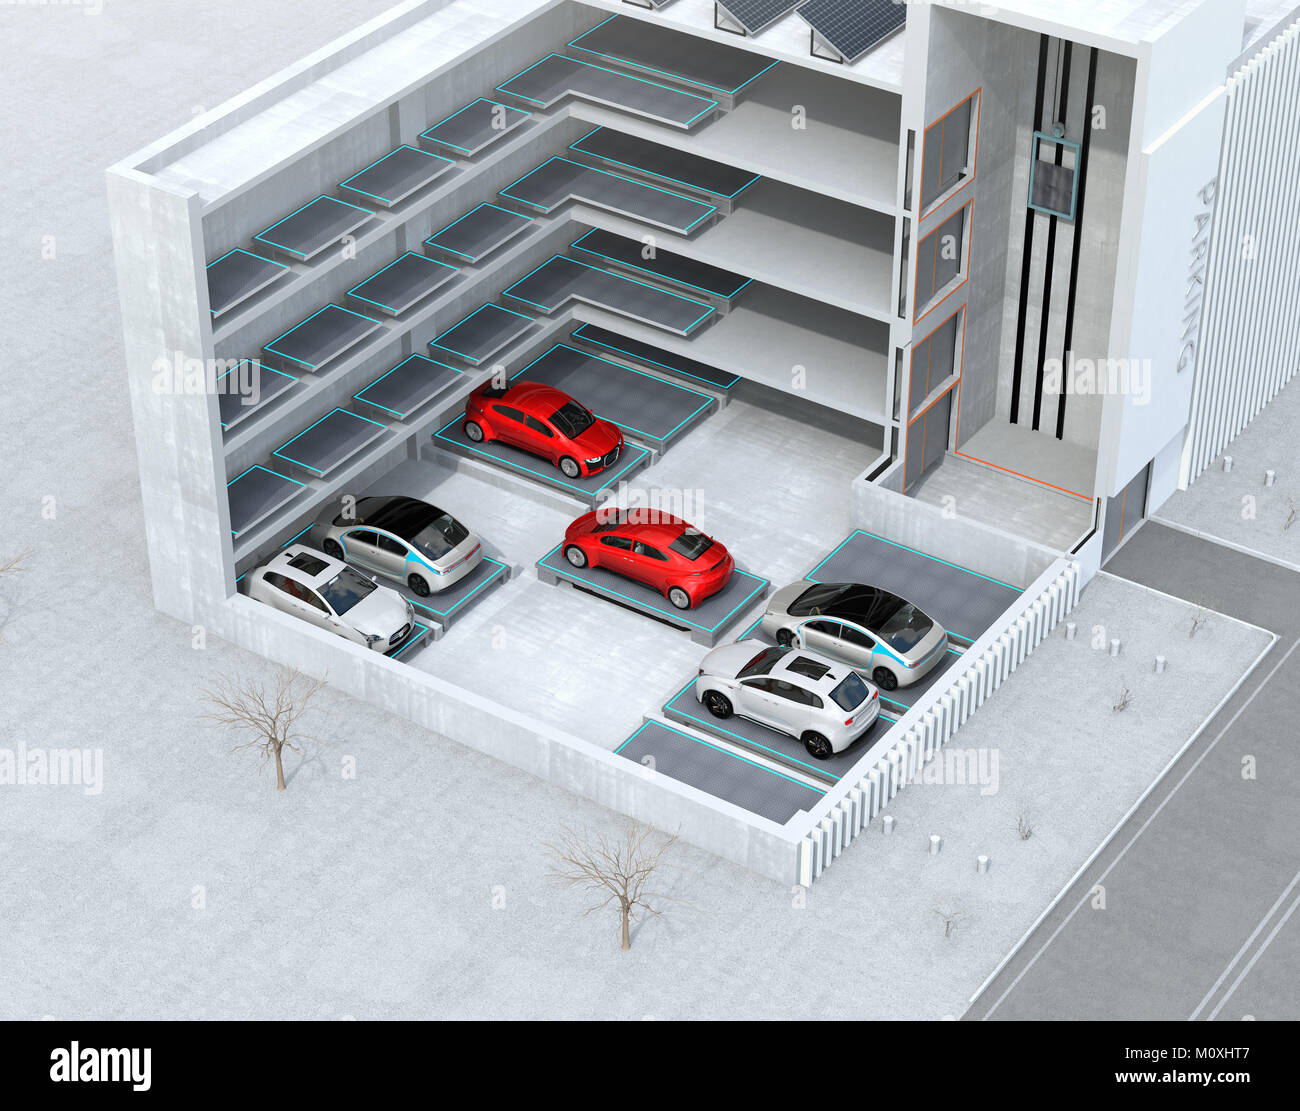 Concepto de imagen seccionada para sistema de aparcamiento automático AGV (vehículo guiado automatizado). Representación 3D imagen. Foto de stock